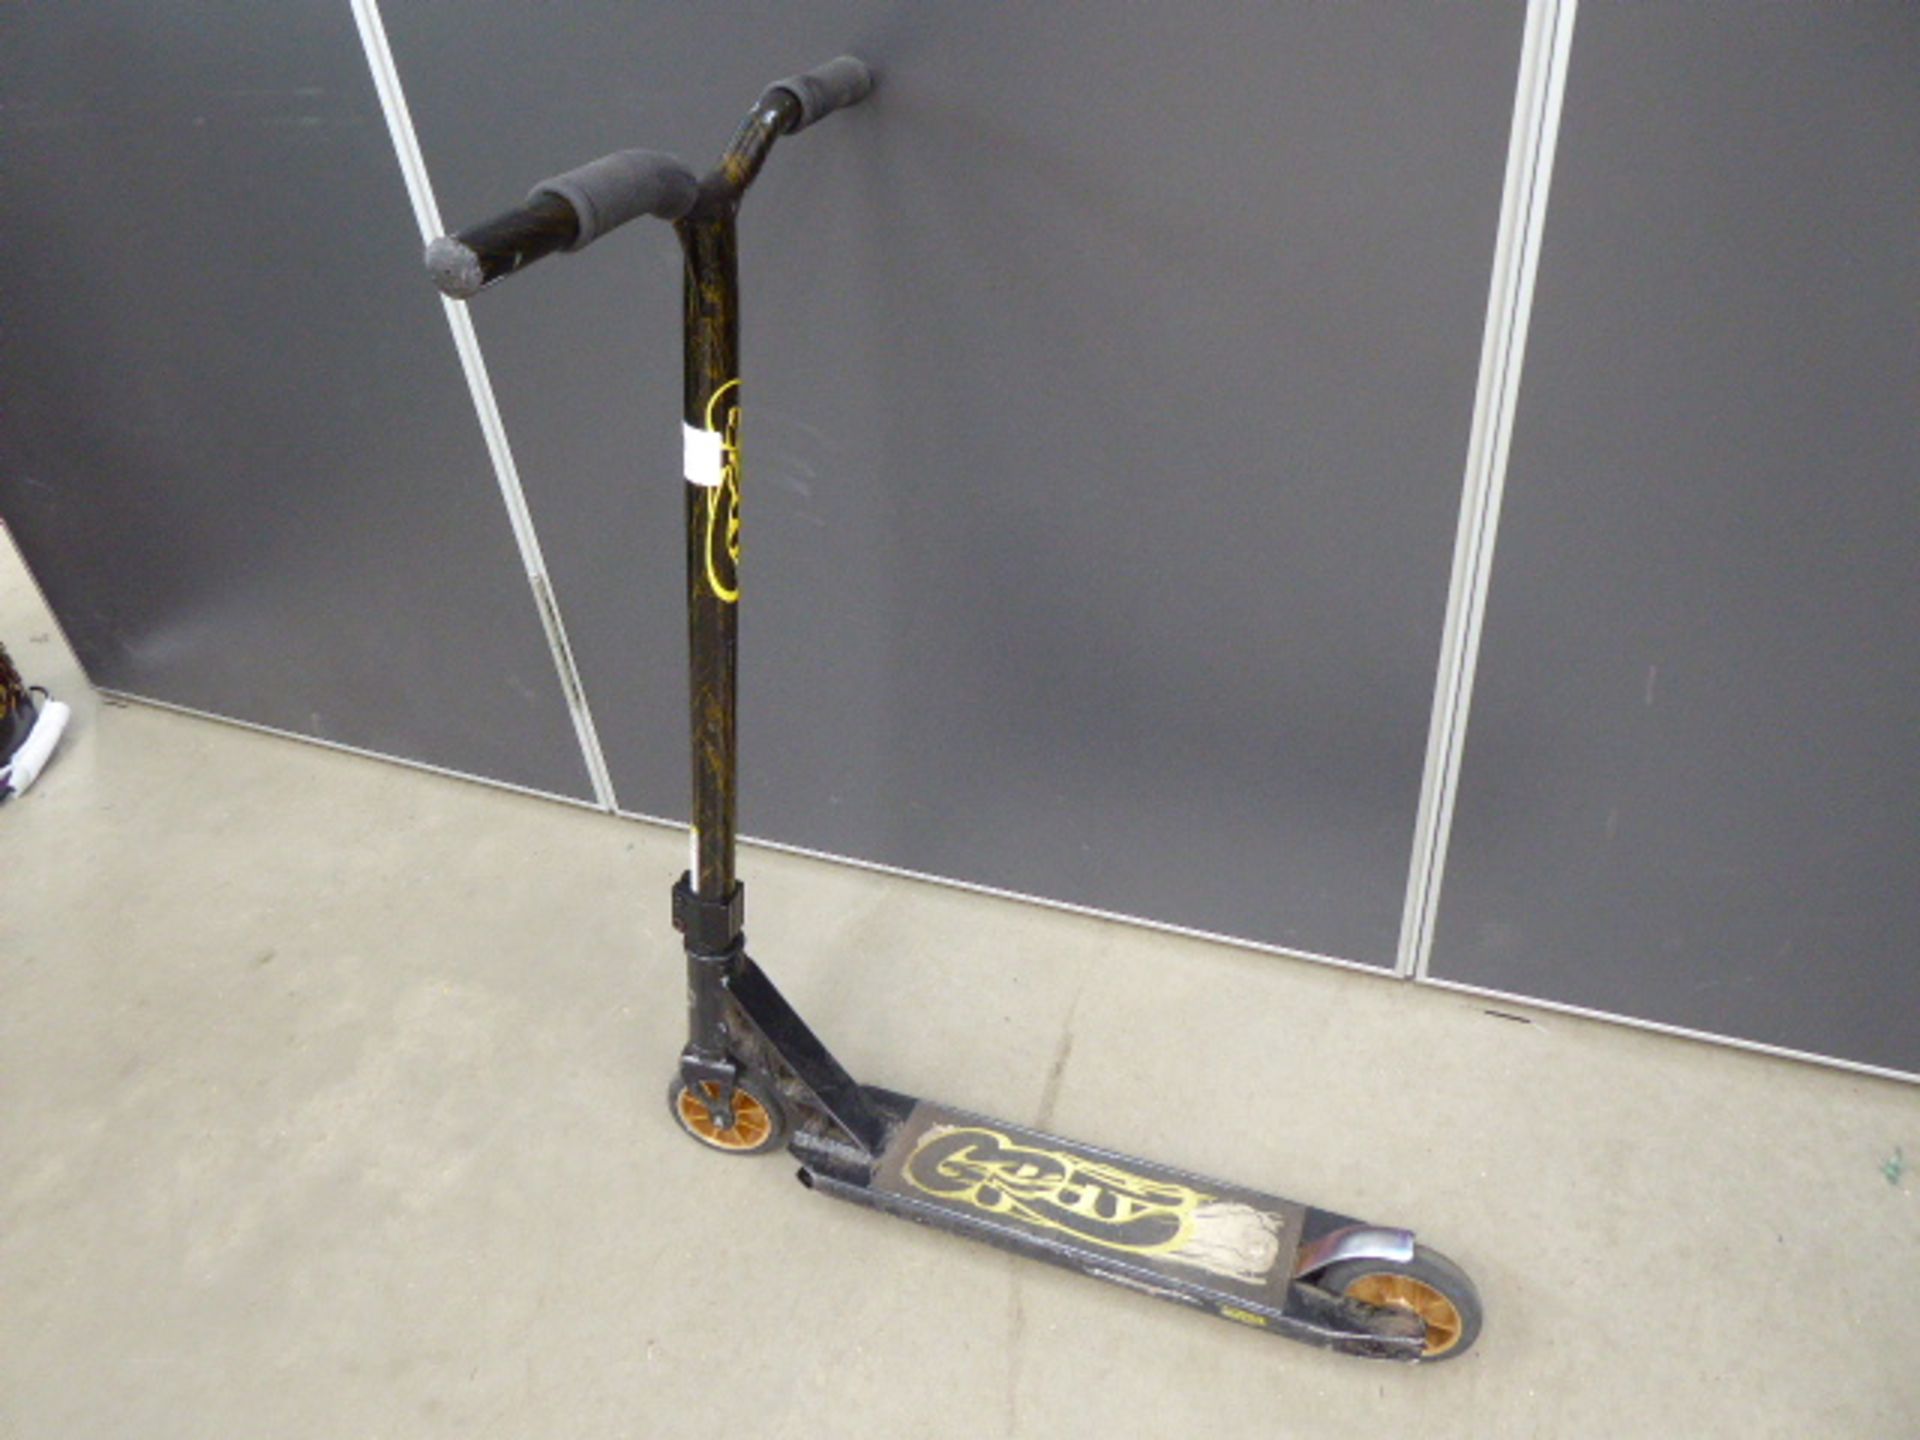 Black 2 wheel scooter